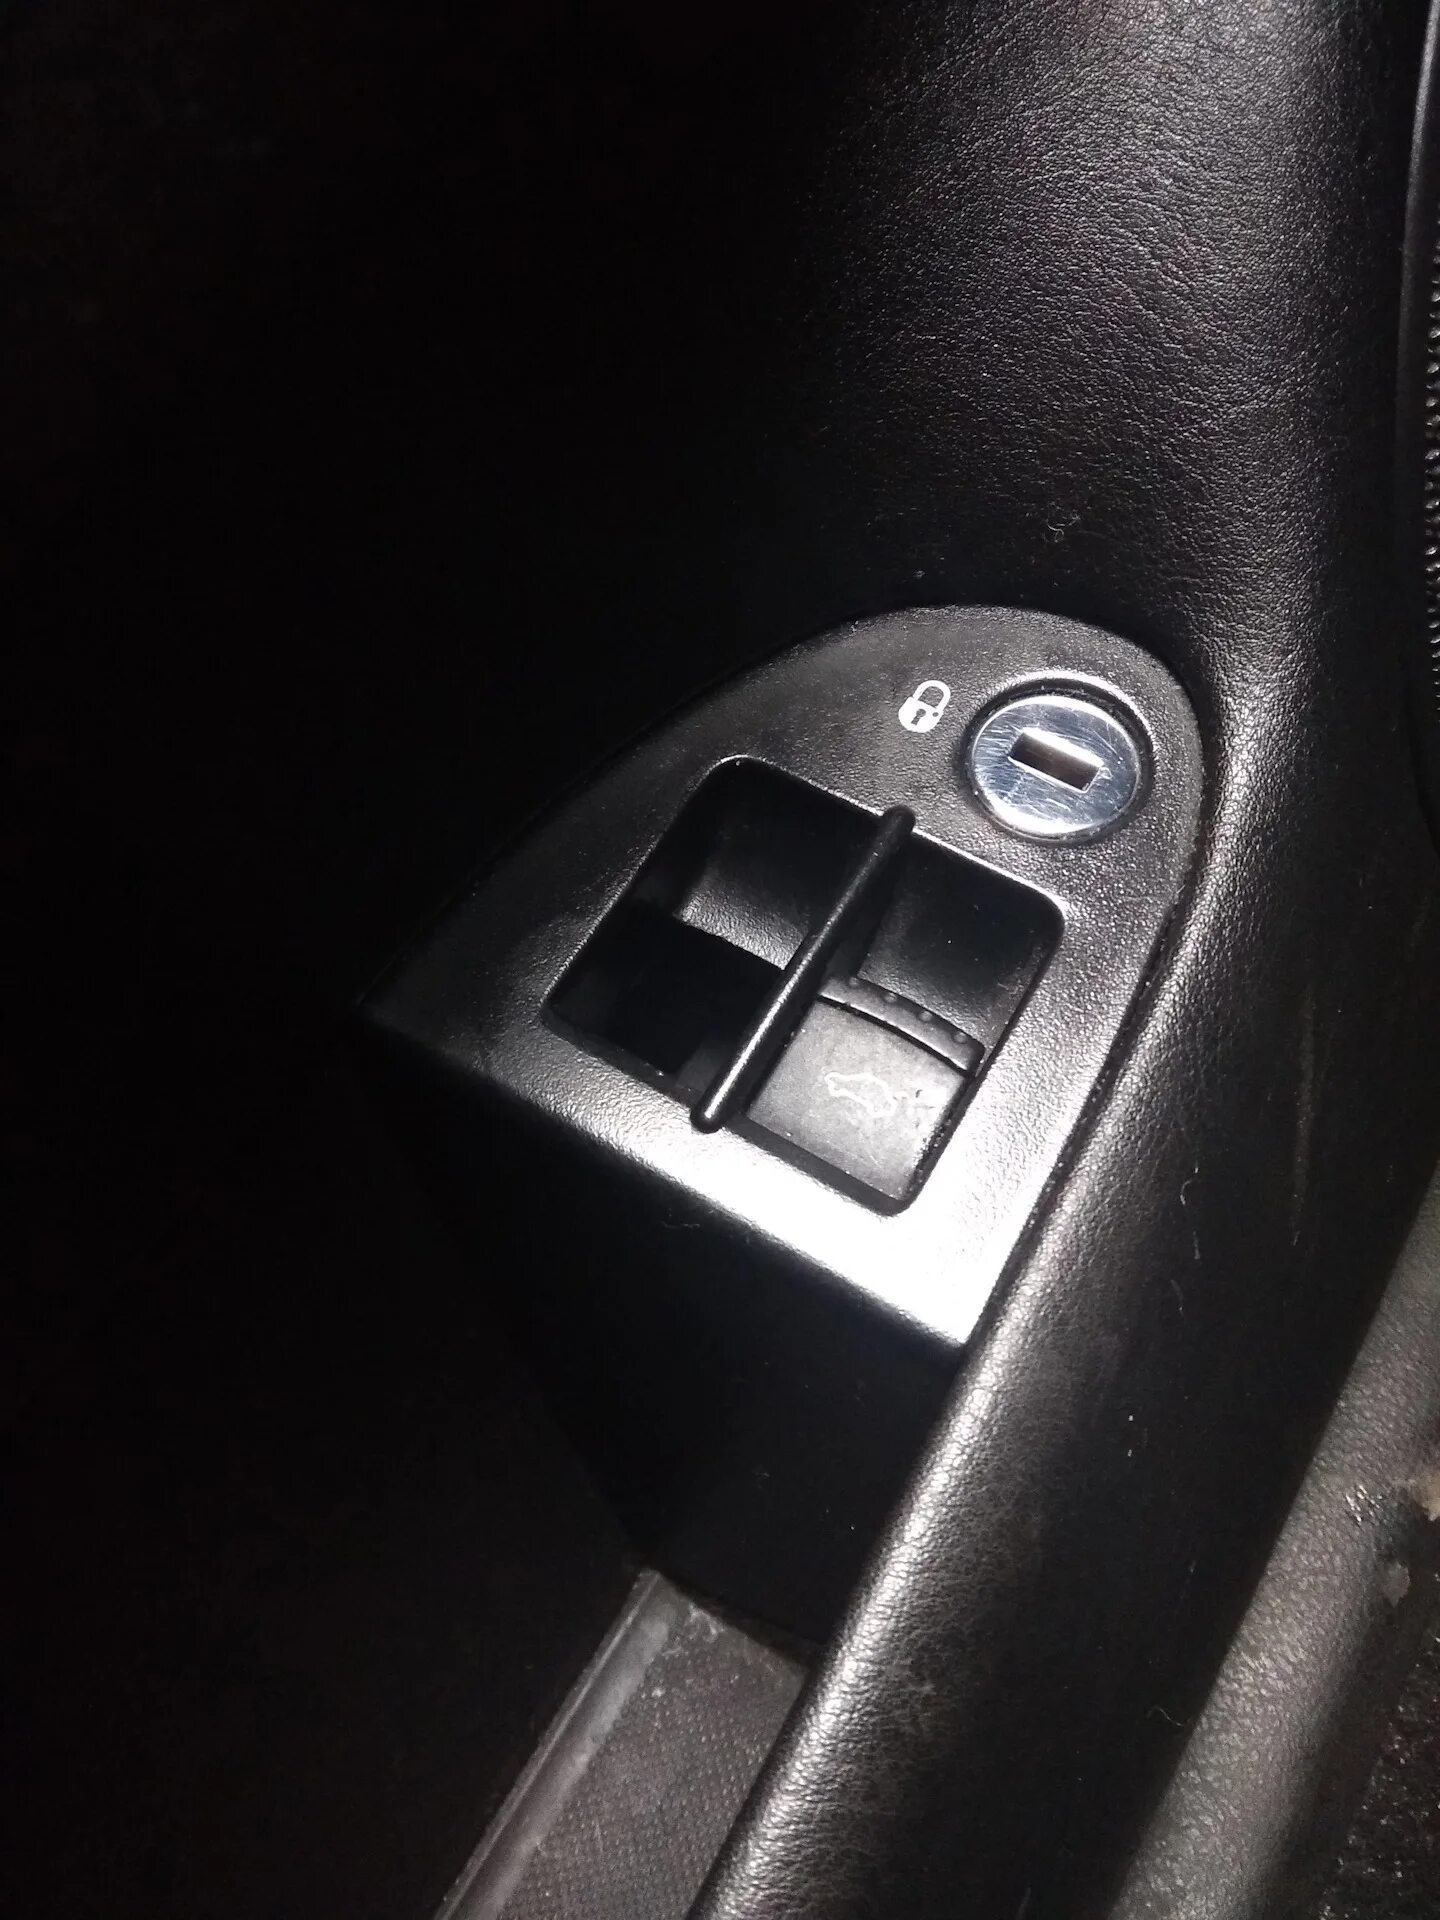 Кнопка бензобака Volkswagen Passat b6. Volkswagen Polo кнопка открытия бензобака. Volkswagen Jetta кнопка открывания бензобака. Фольксваген поло 2014 кнопка открывания бака.